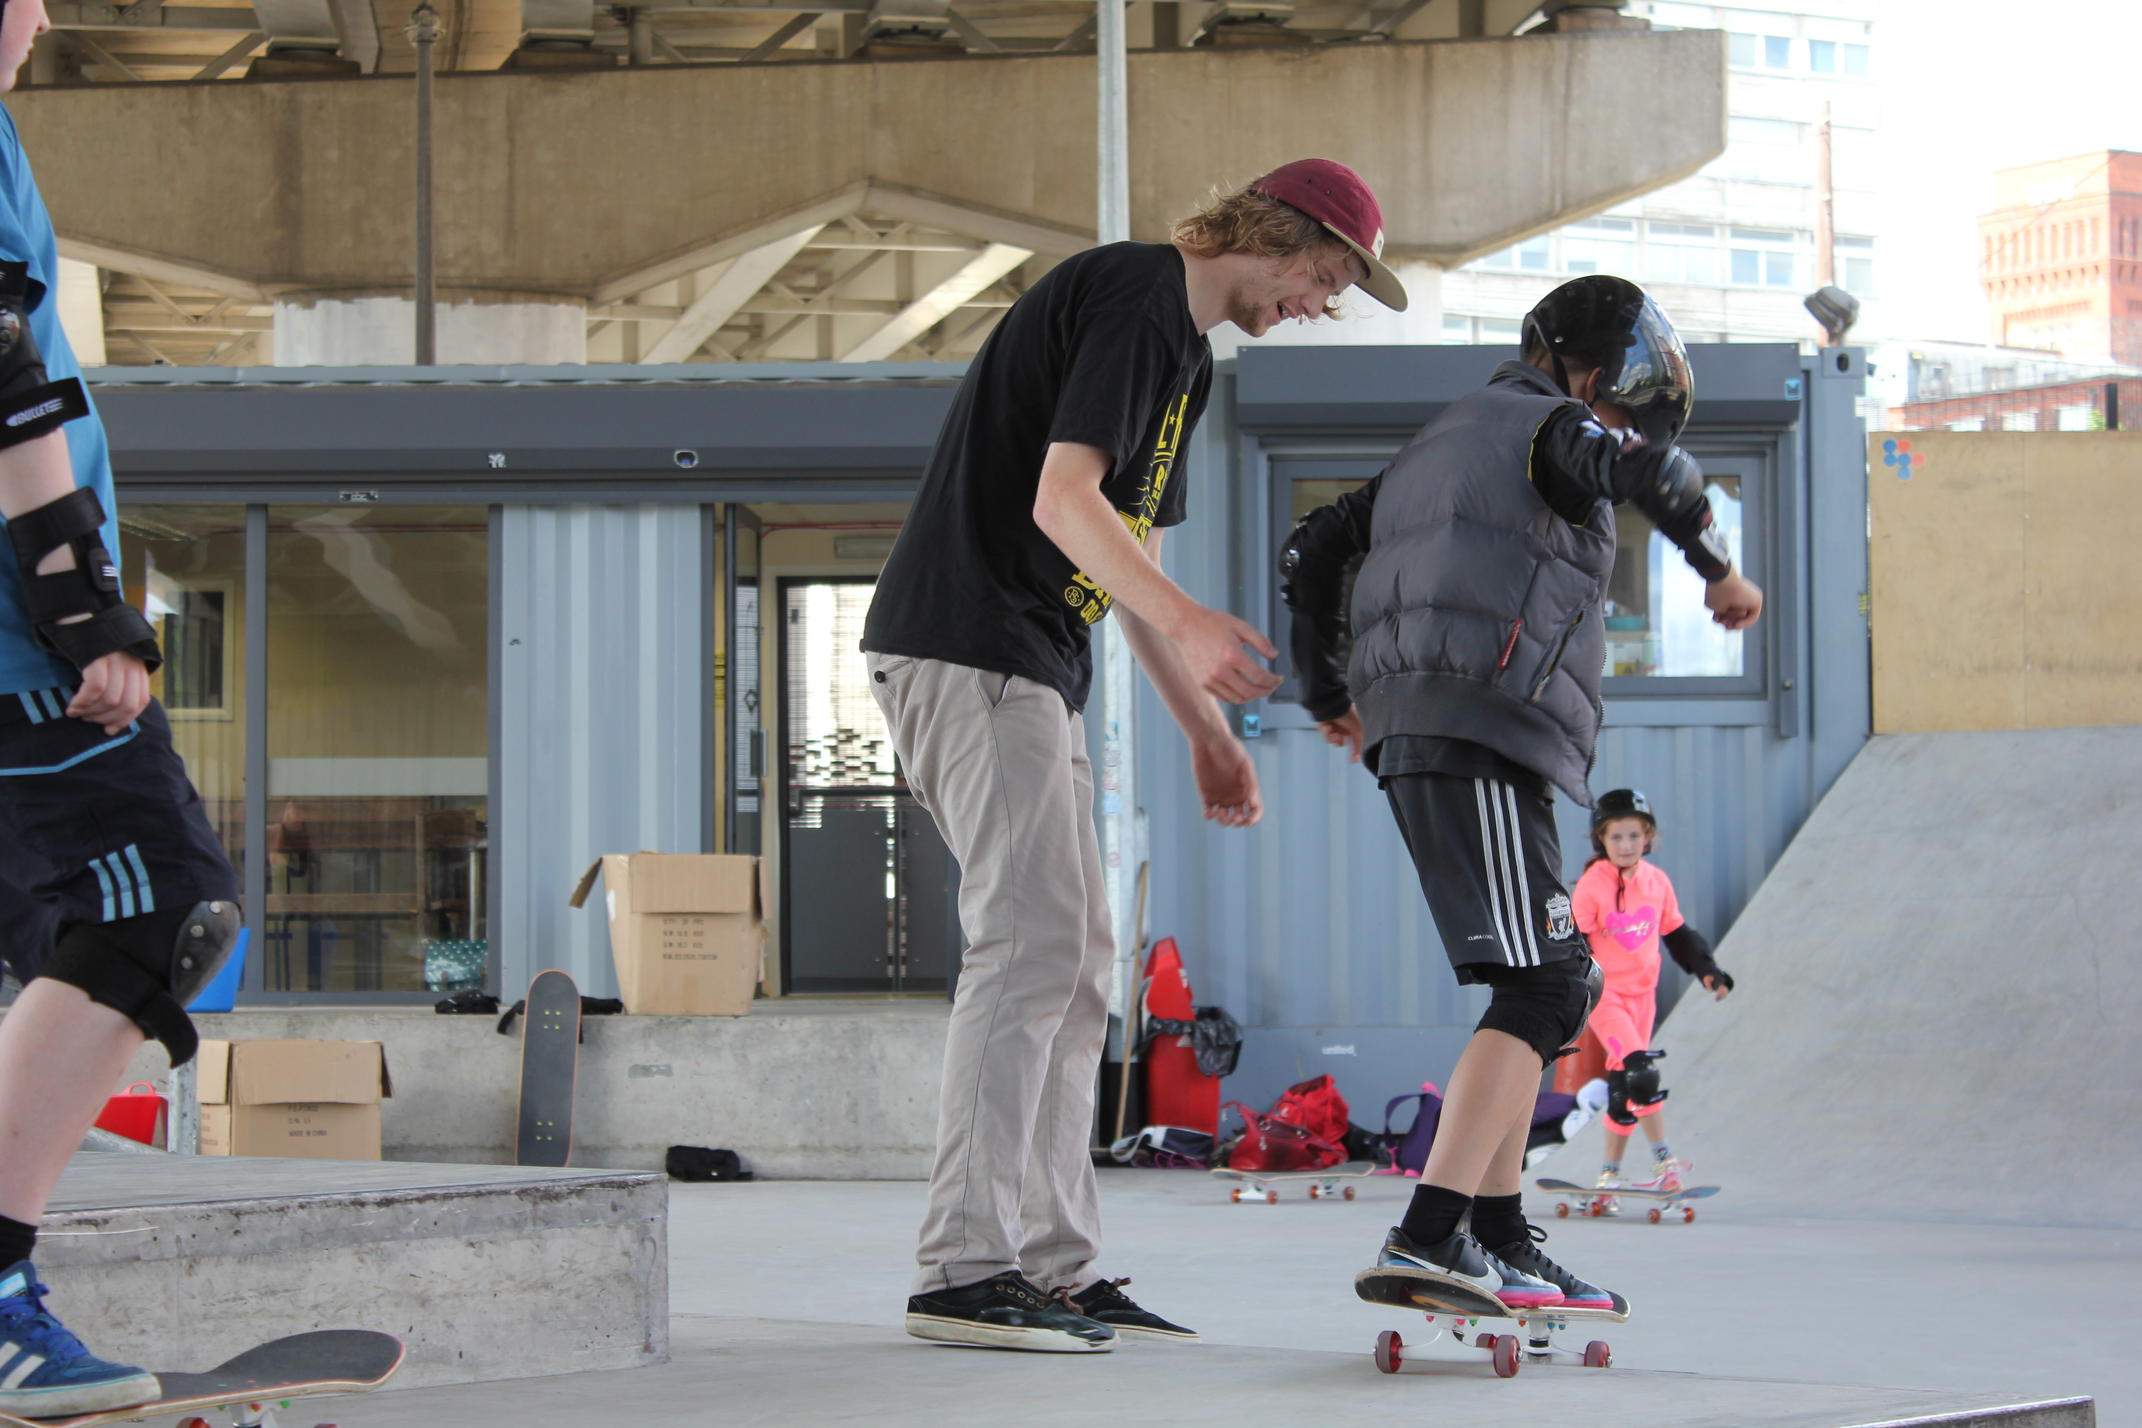 Projekts Indoor Skatepark - YourDaysOut